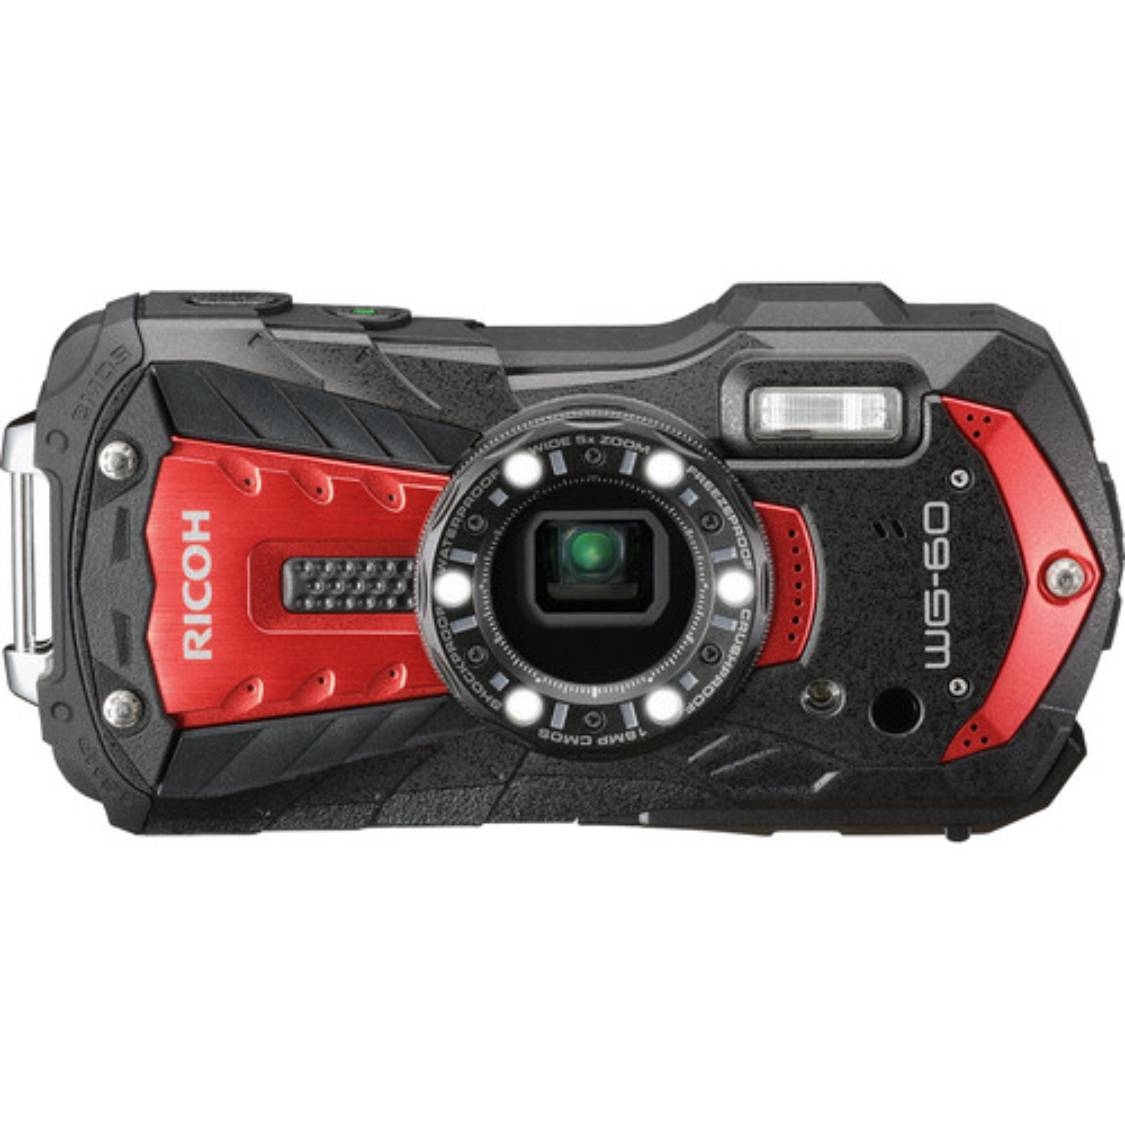 Ricoh WG-60 Waterproof Digital Camera (red) - Open Box